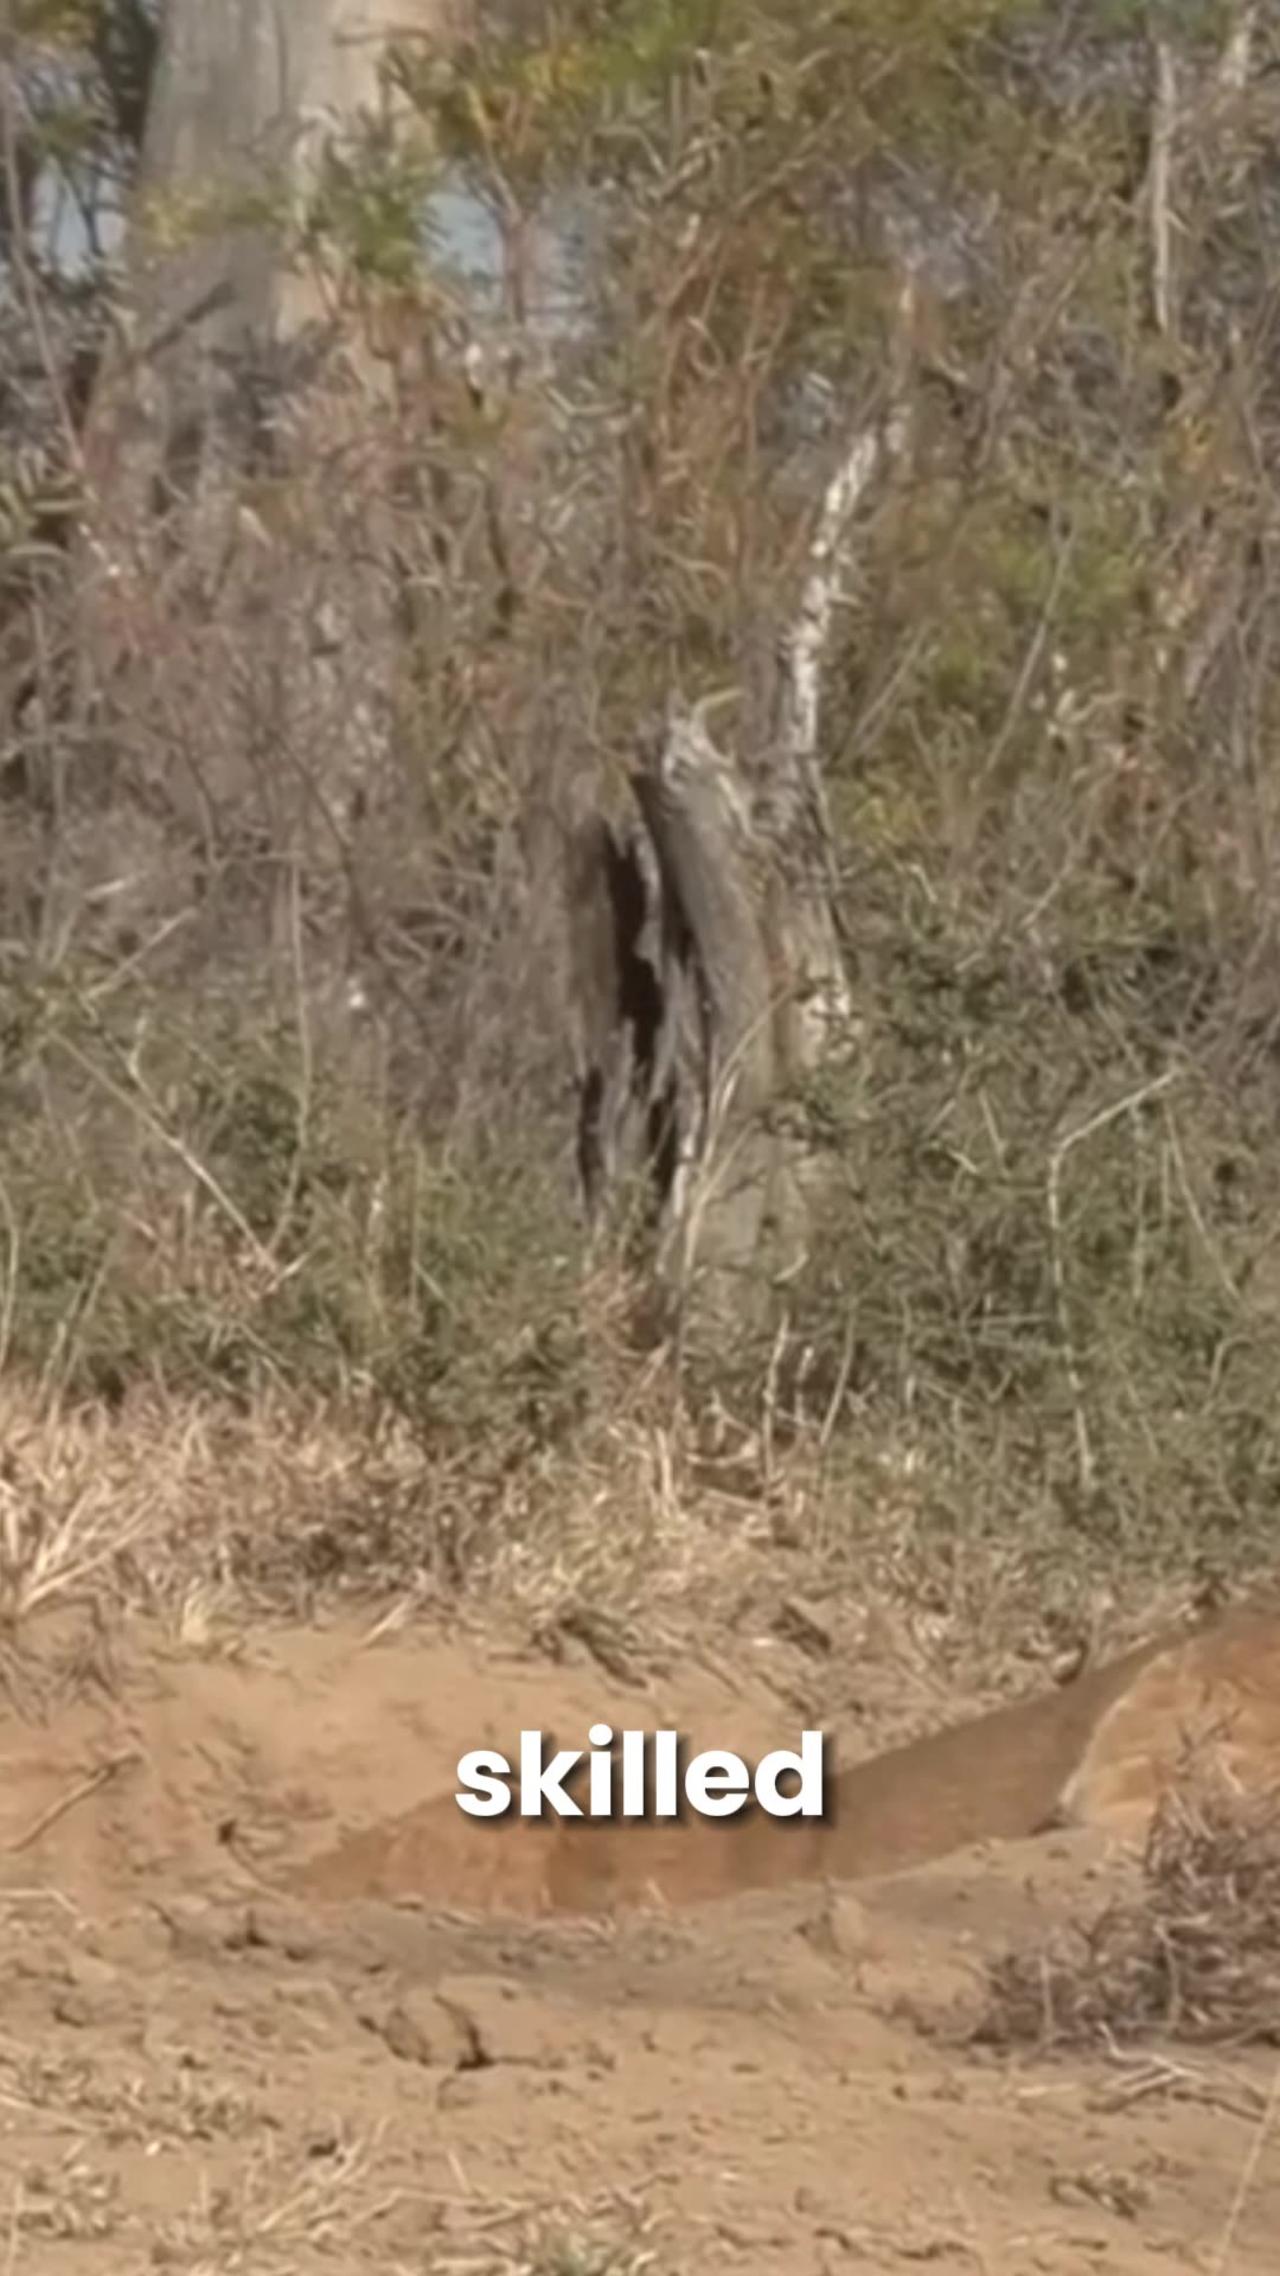 lion pulls warthog out burrow